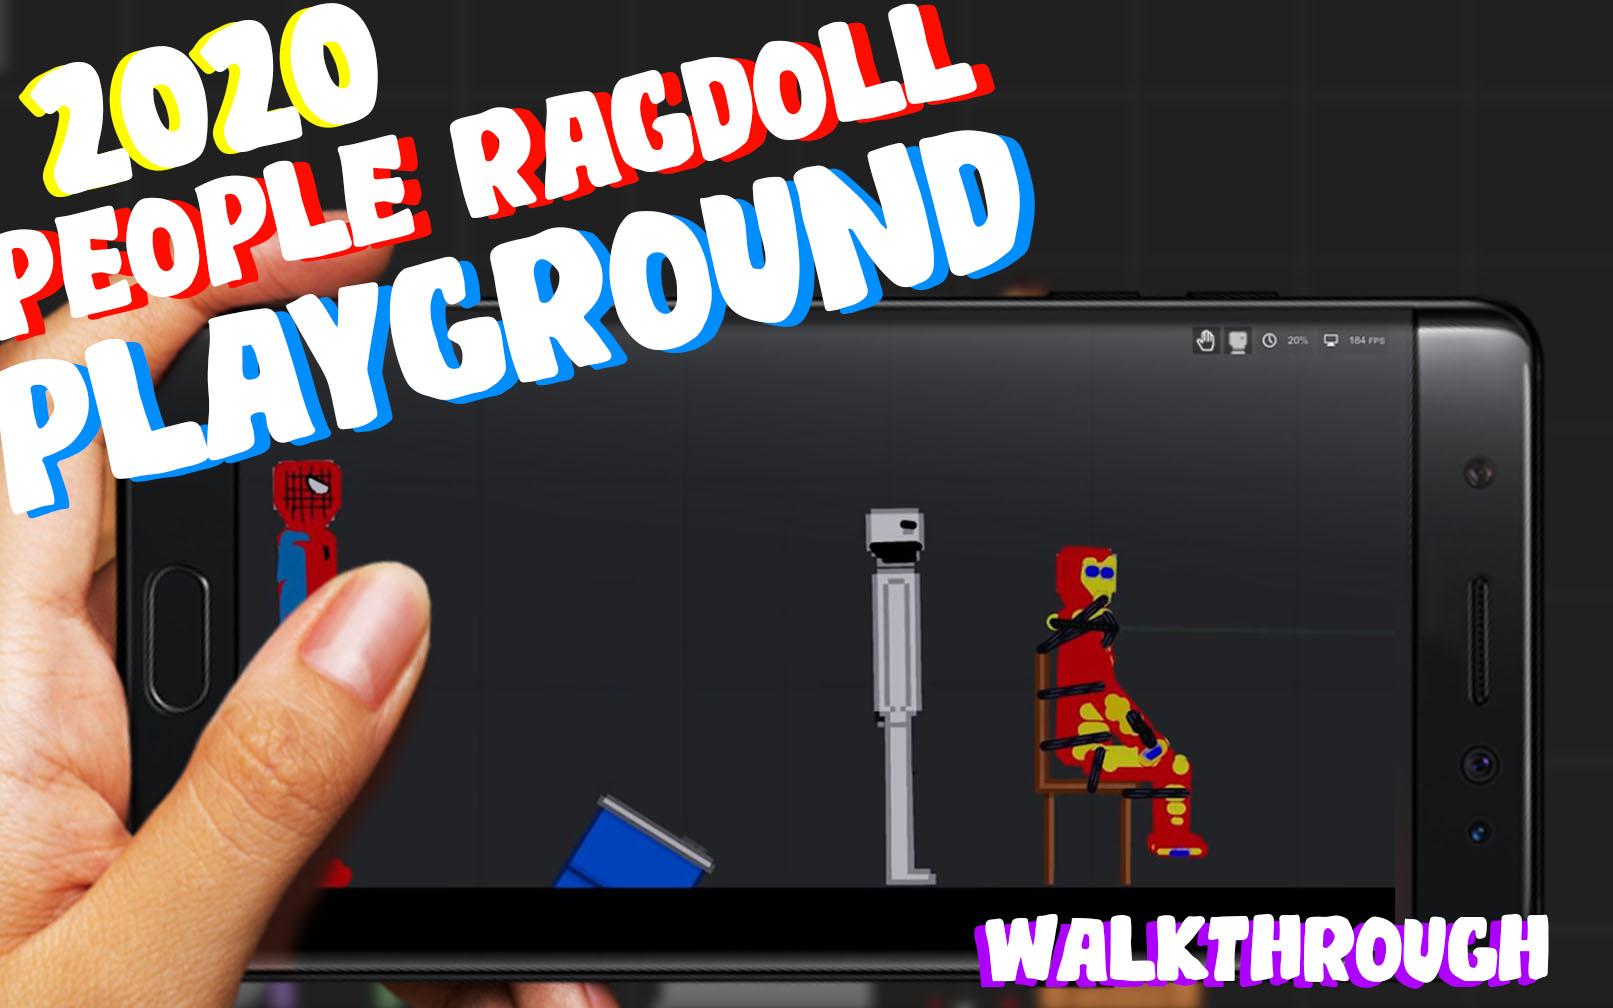 People Ragdoll Playground walkthrough Free Download